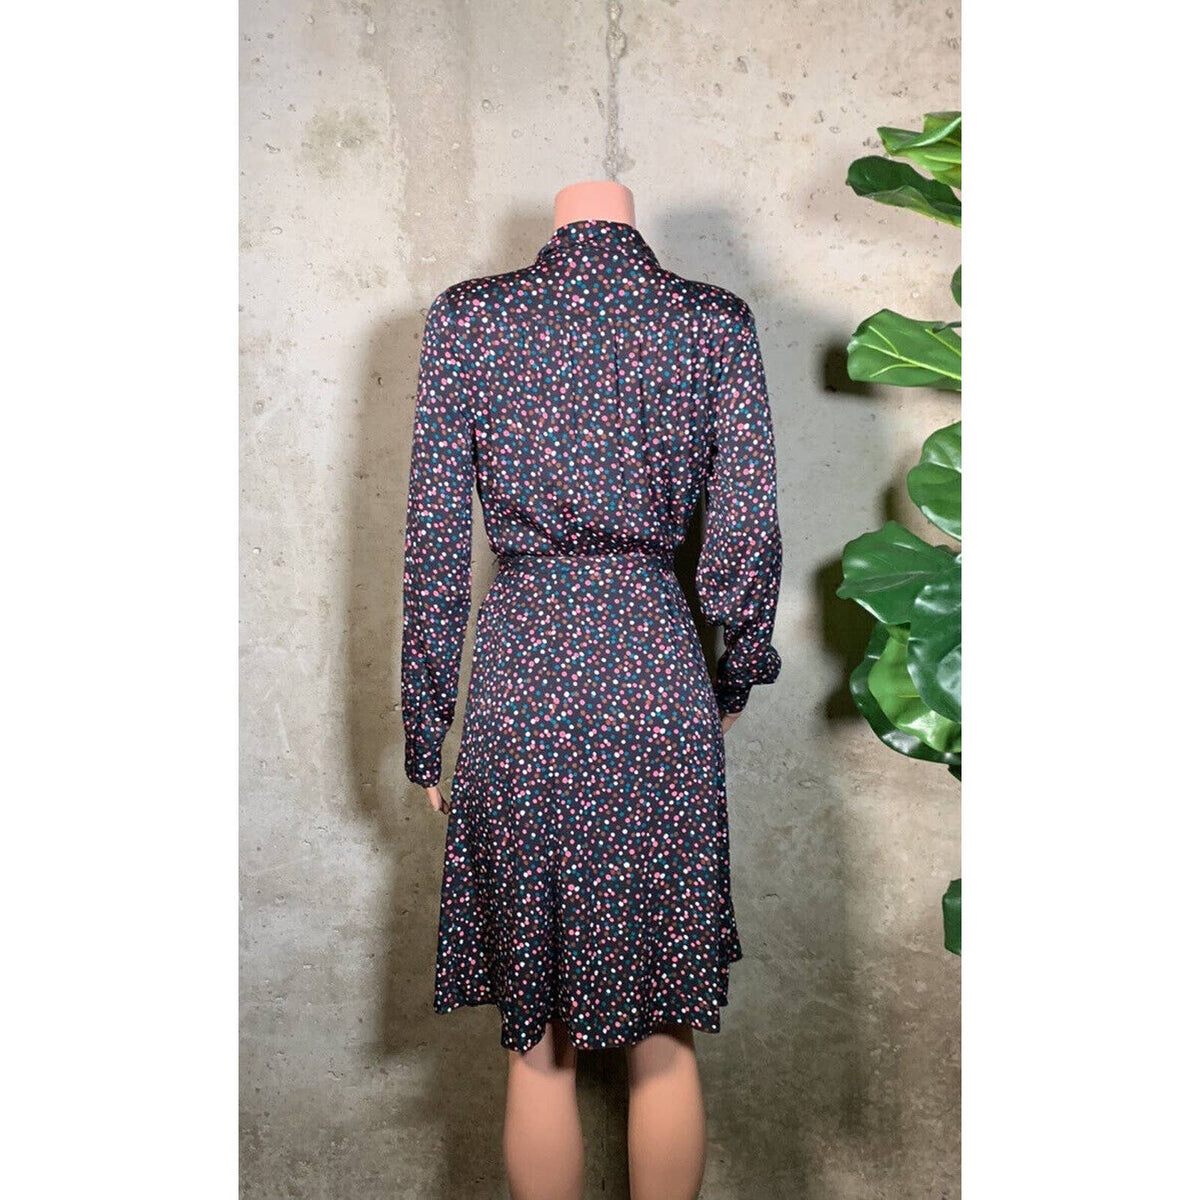 Diane Von Furstenberg Multi-Color Polka Dot Dress Sz. Medium